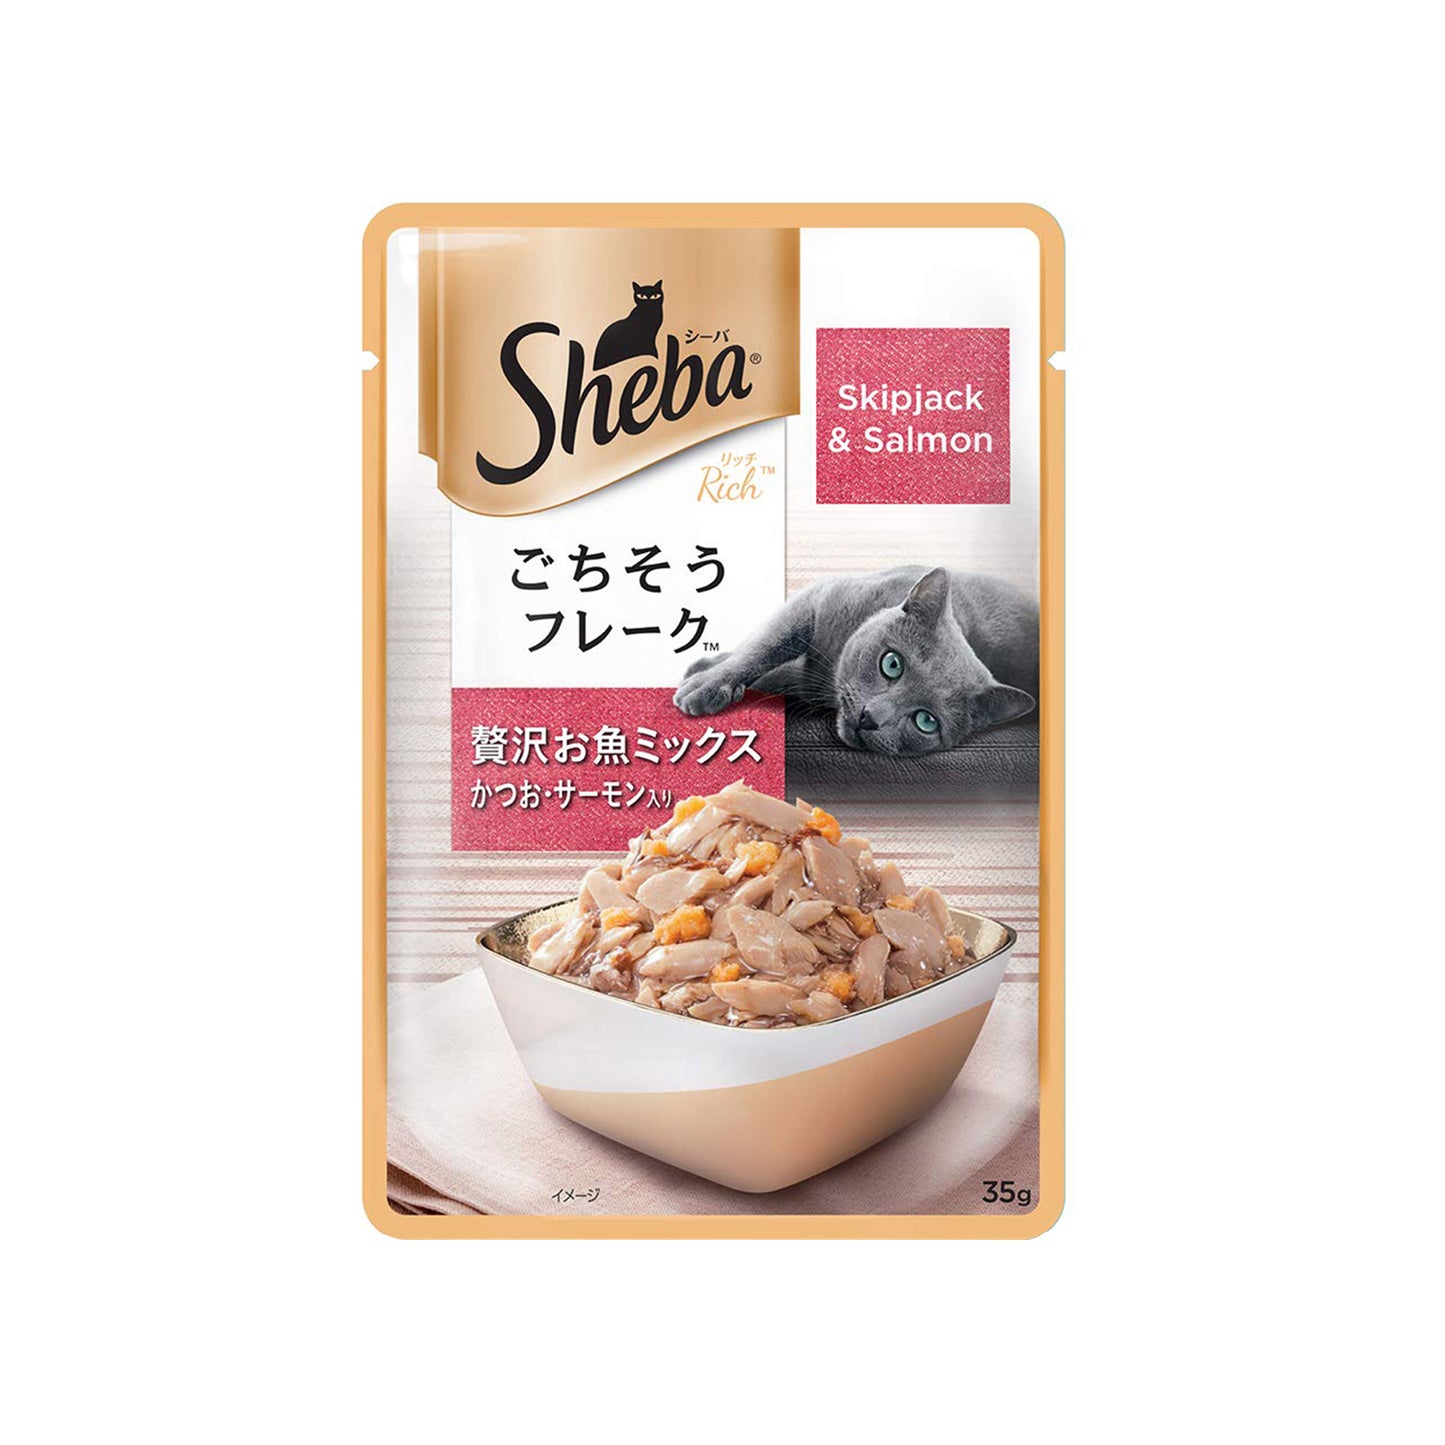 Sheba - Premium Wet Cat Food, Fish Mix (Skipjack & Salmon)